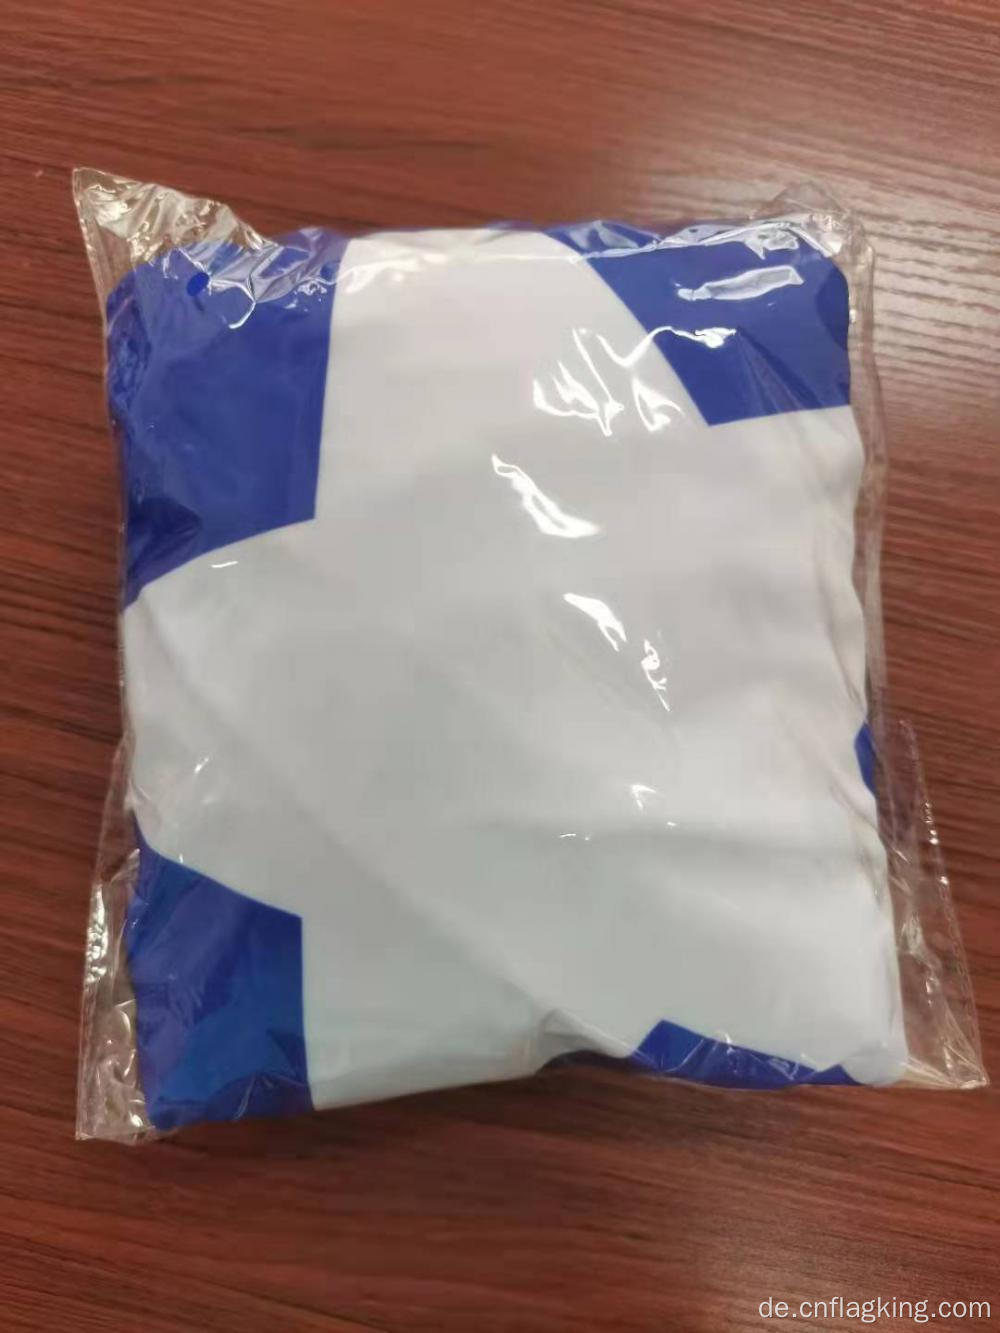 Die WM-Flagge Bundesrepublik Nigeri Motorhaubenflagge 3.3X5FT 100% Polyester Motorflagge Elastische Stoffe